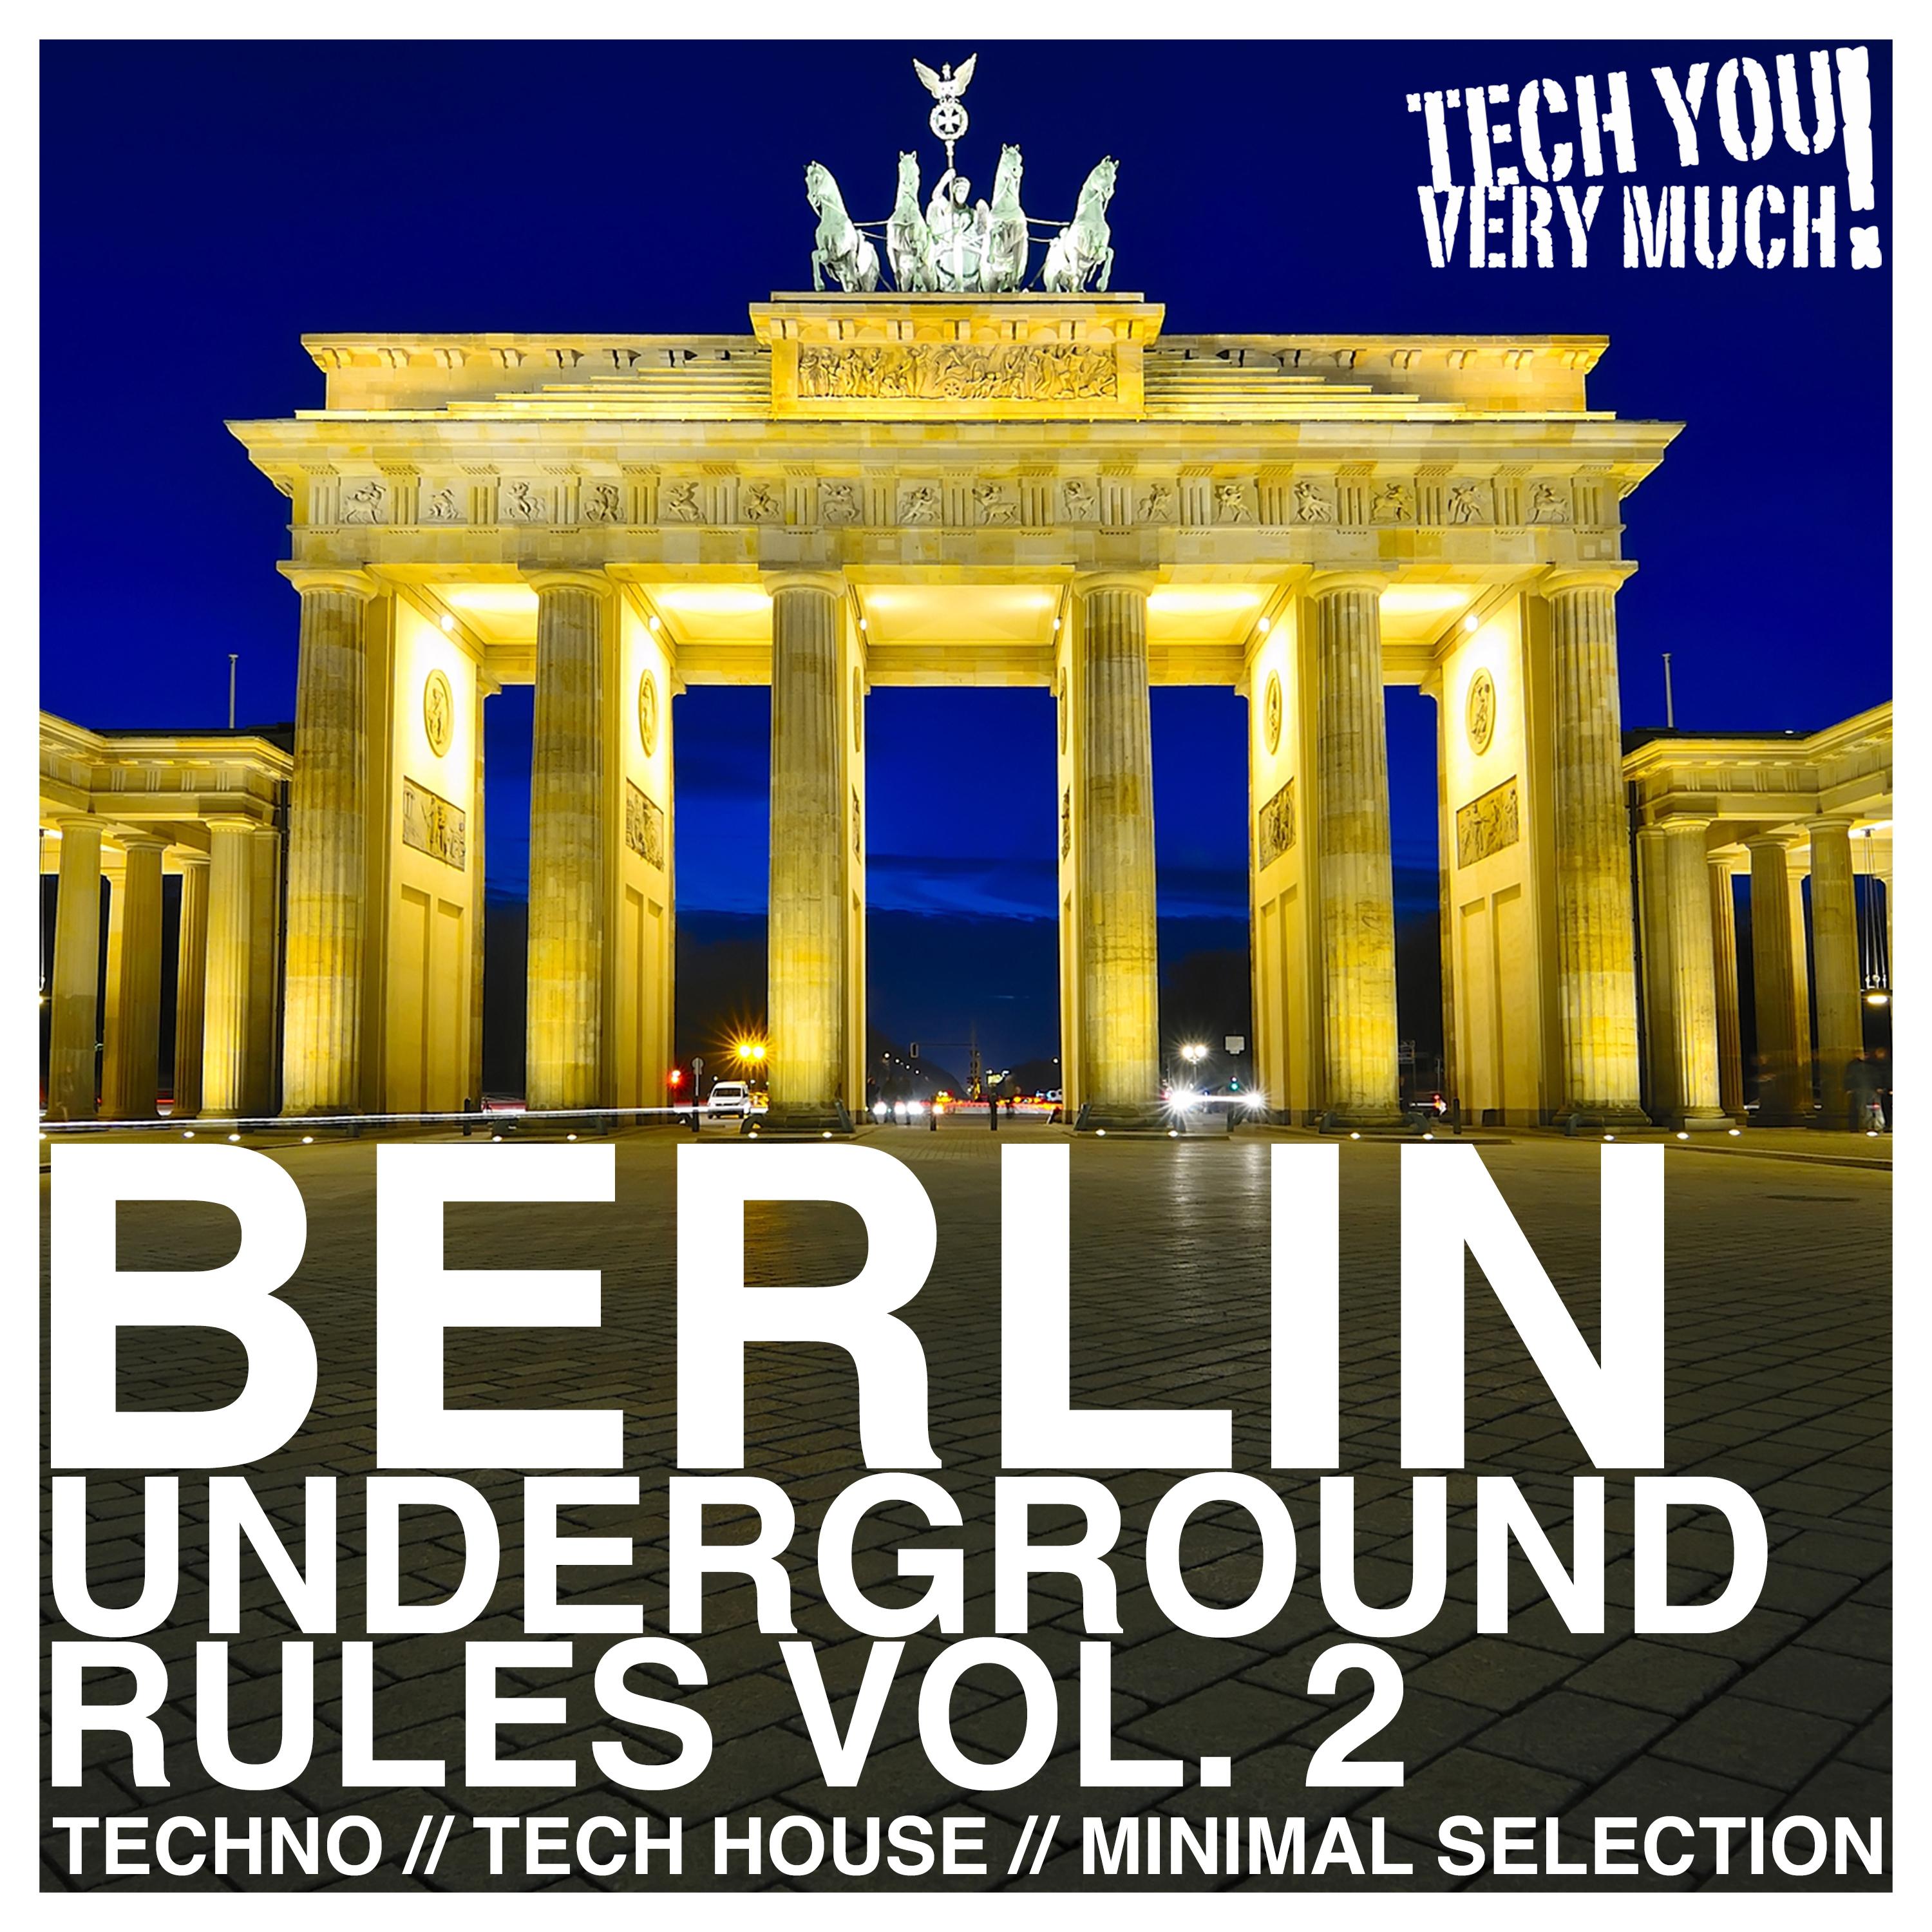 Berlin Underground Rules, Vol. 2 (Techno, Tech House, Minimal Selection)